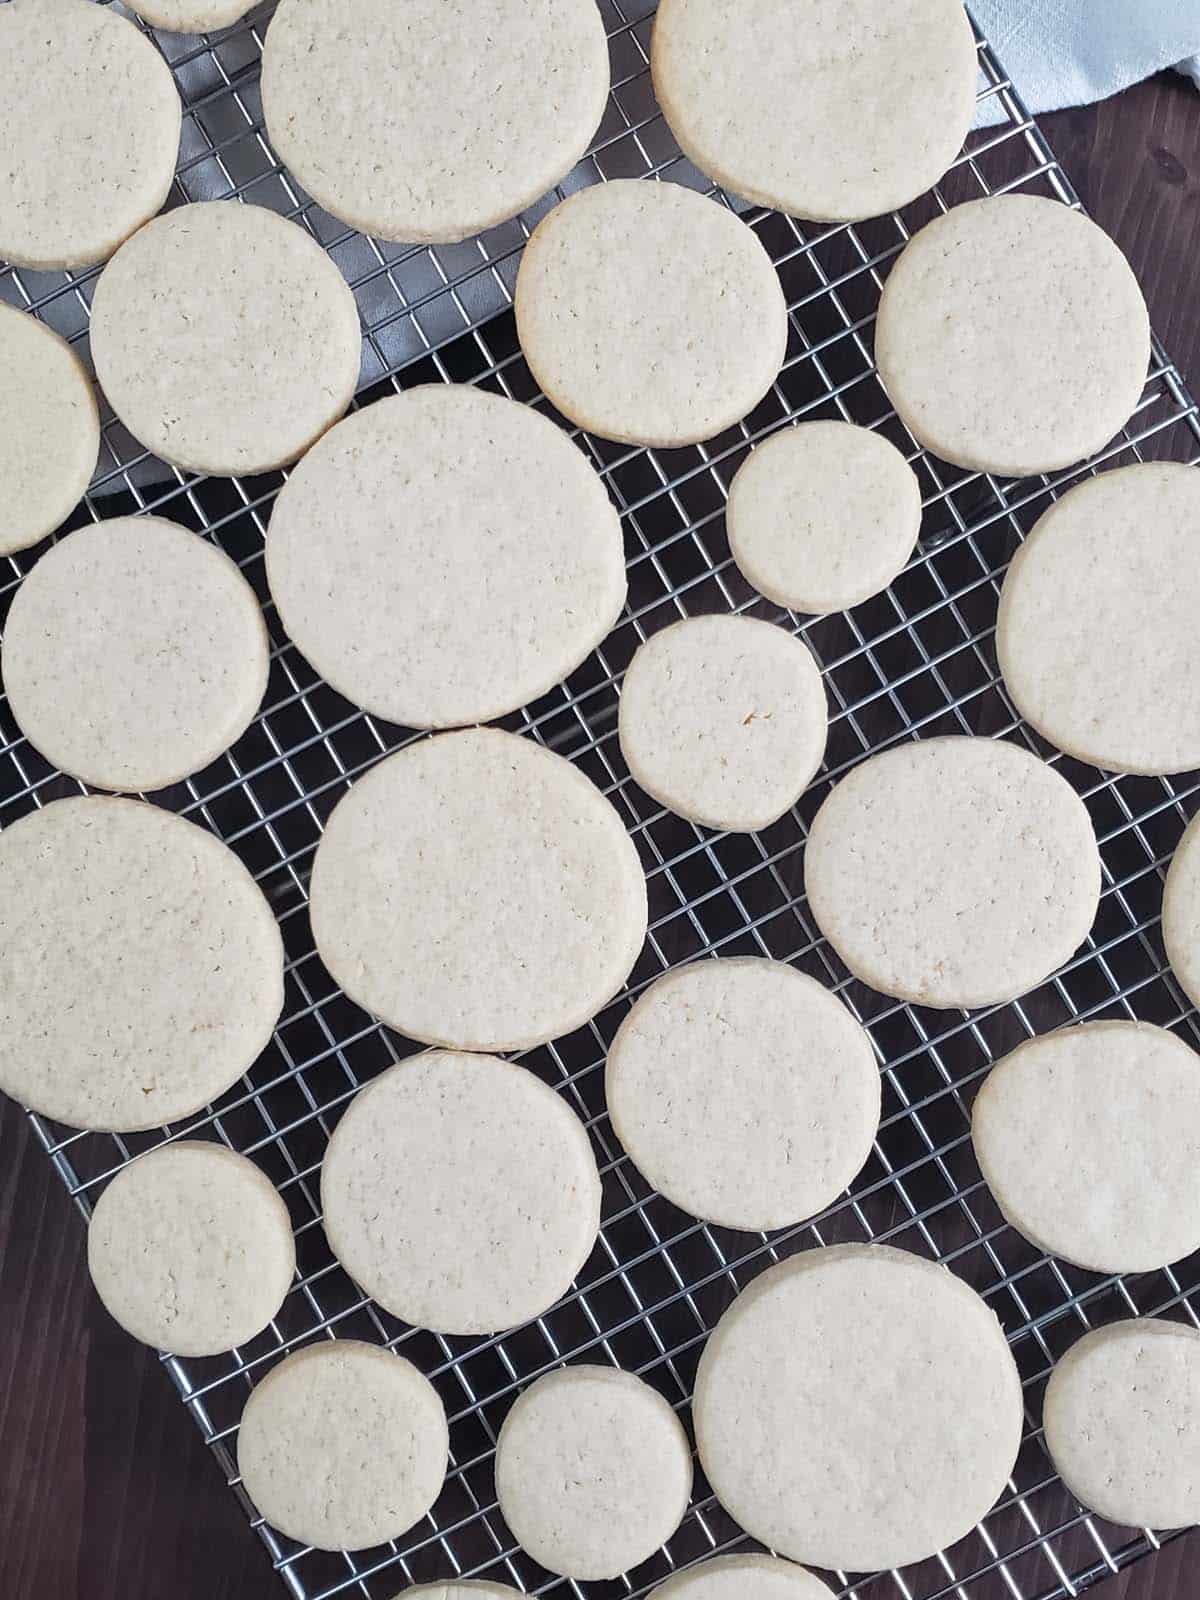 Round sugar cookies on a metal cooling rack.